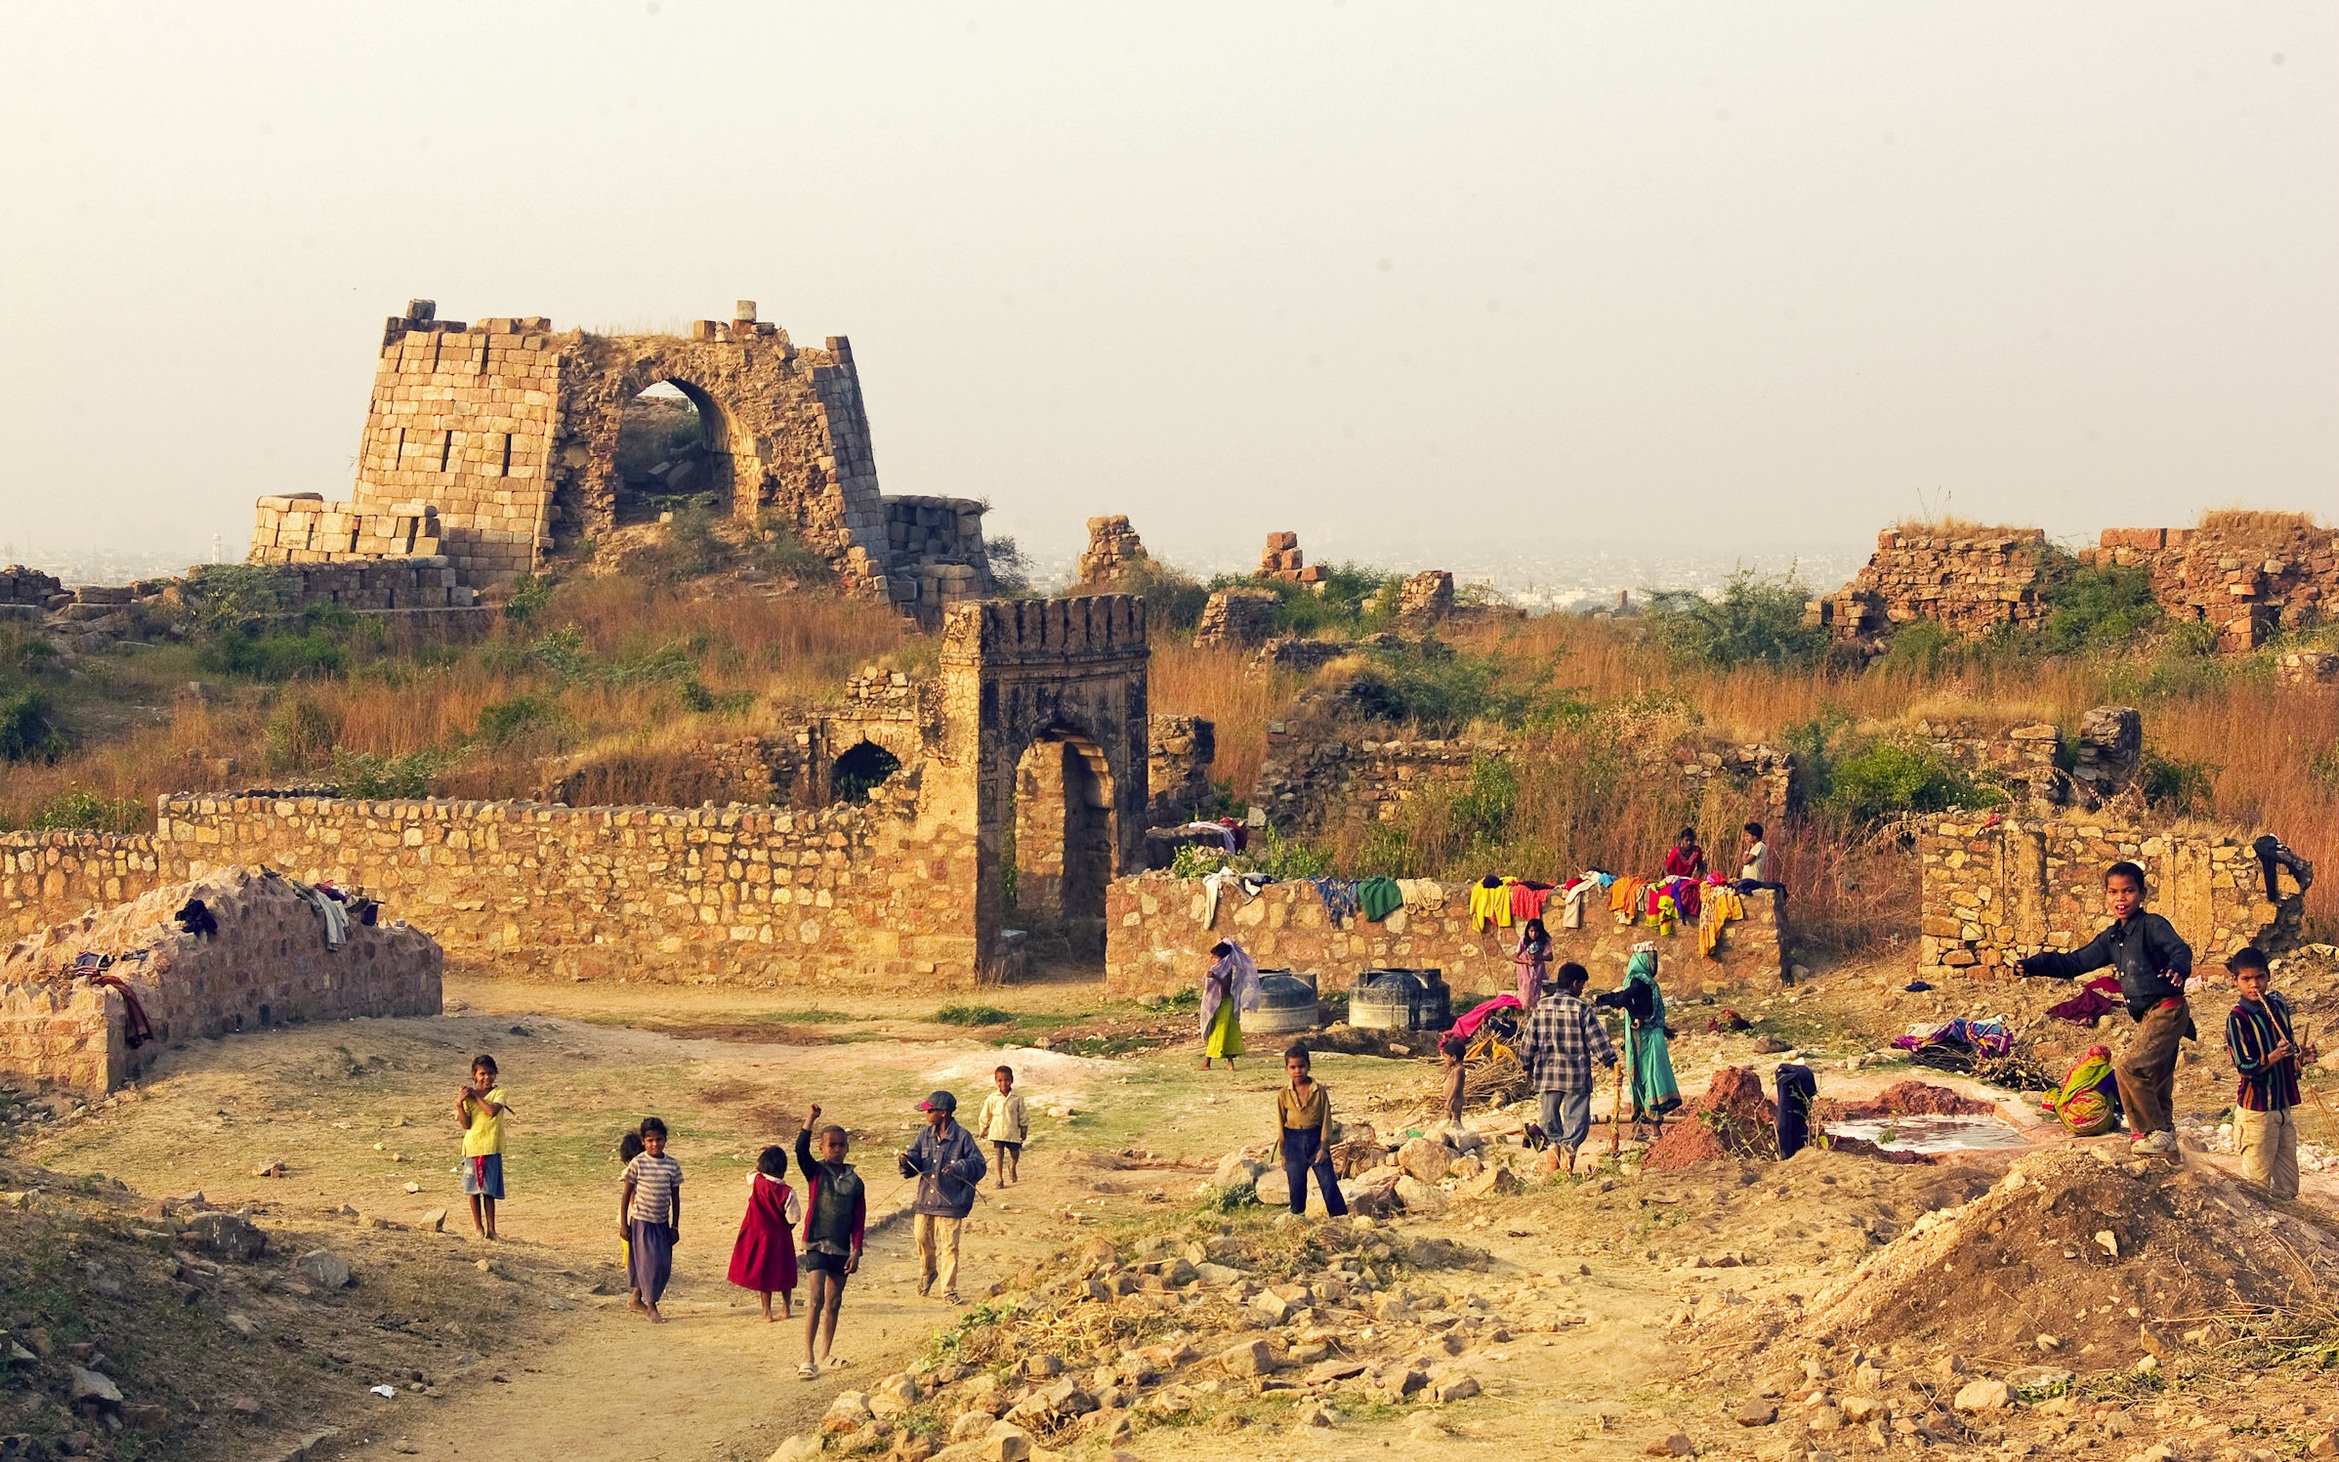  Tughluqabad Fort - New Delhi | Courtesy David U’Prichard 